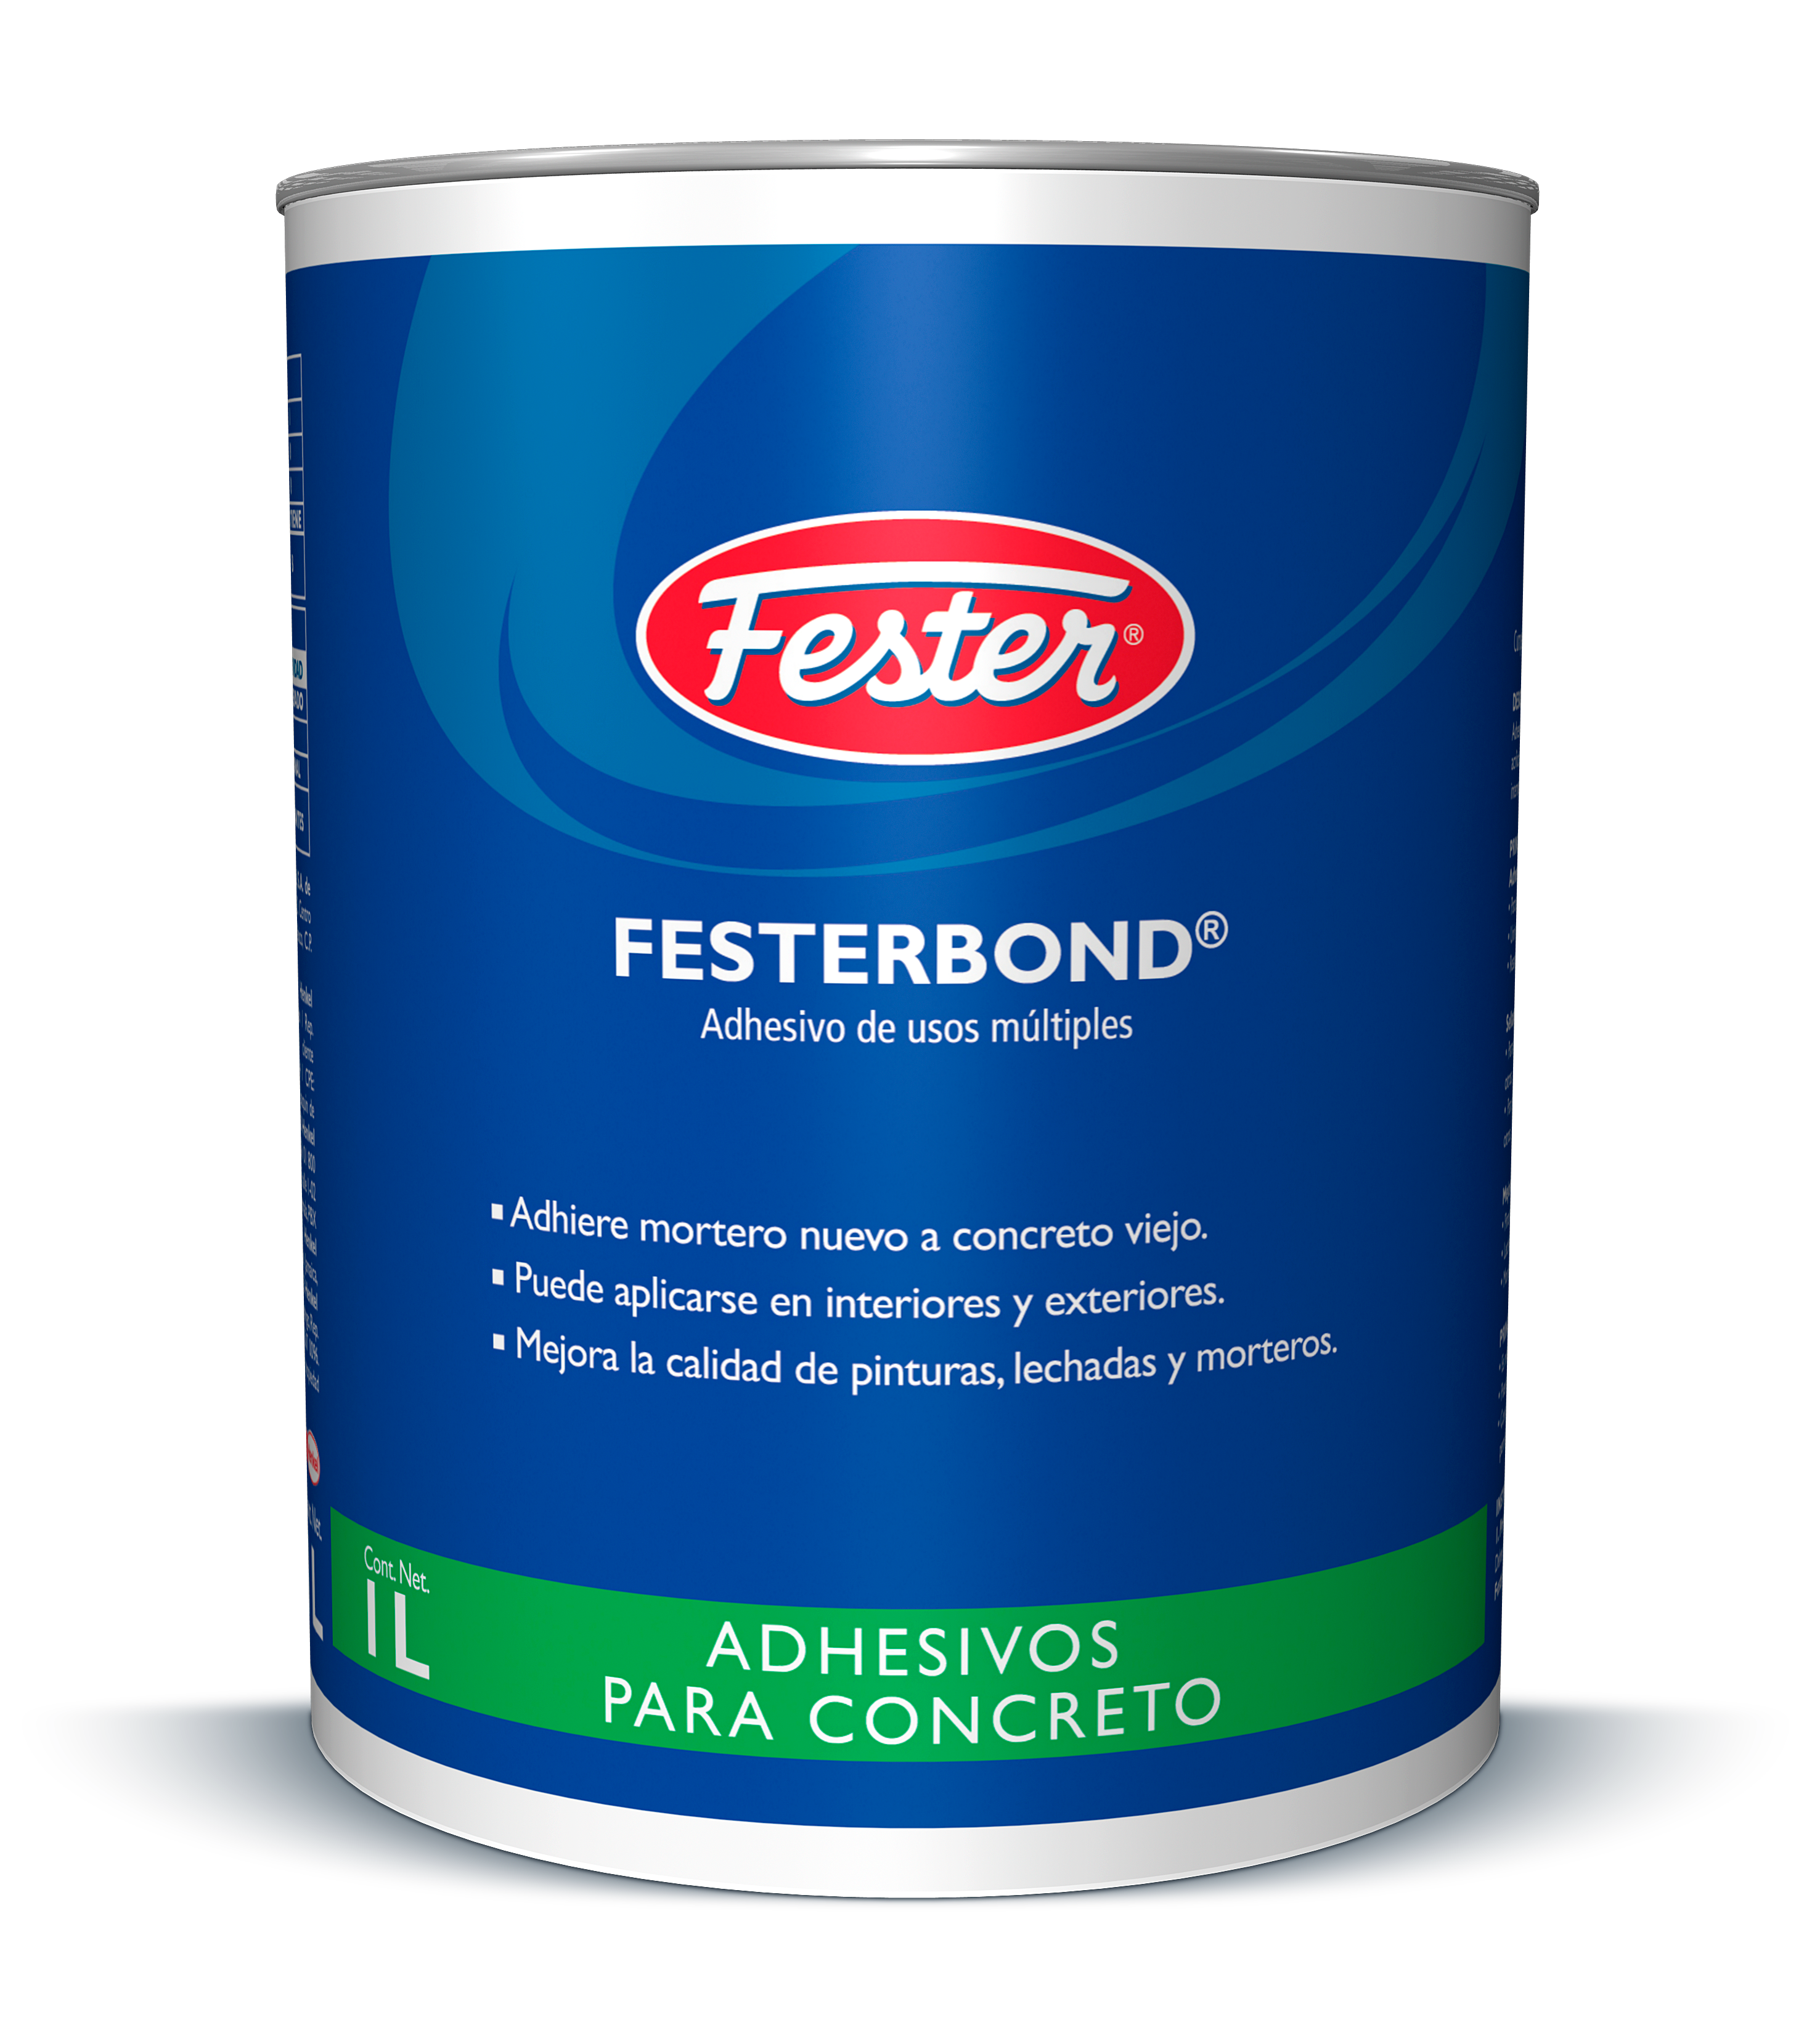 FESTERBOND – Fester Arrecife